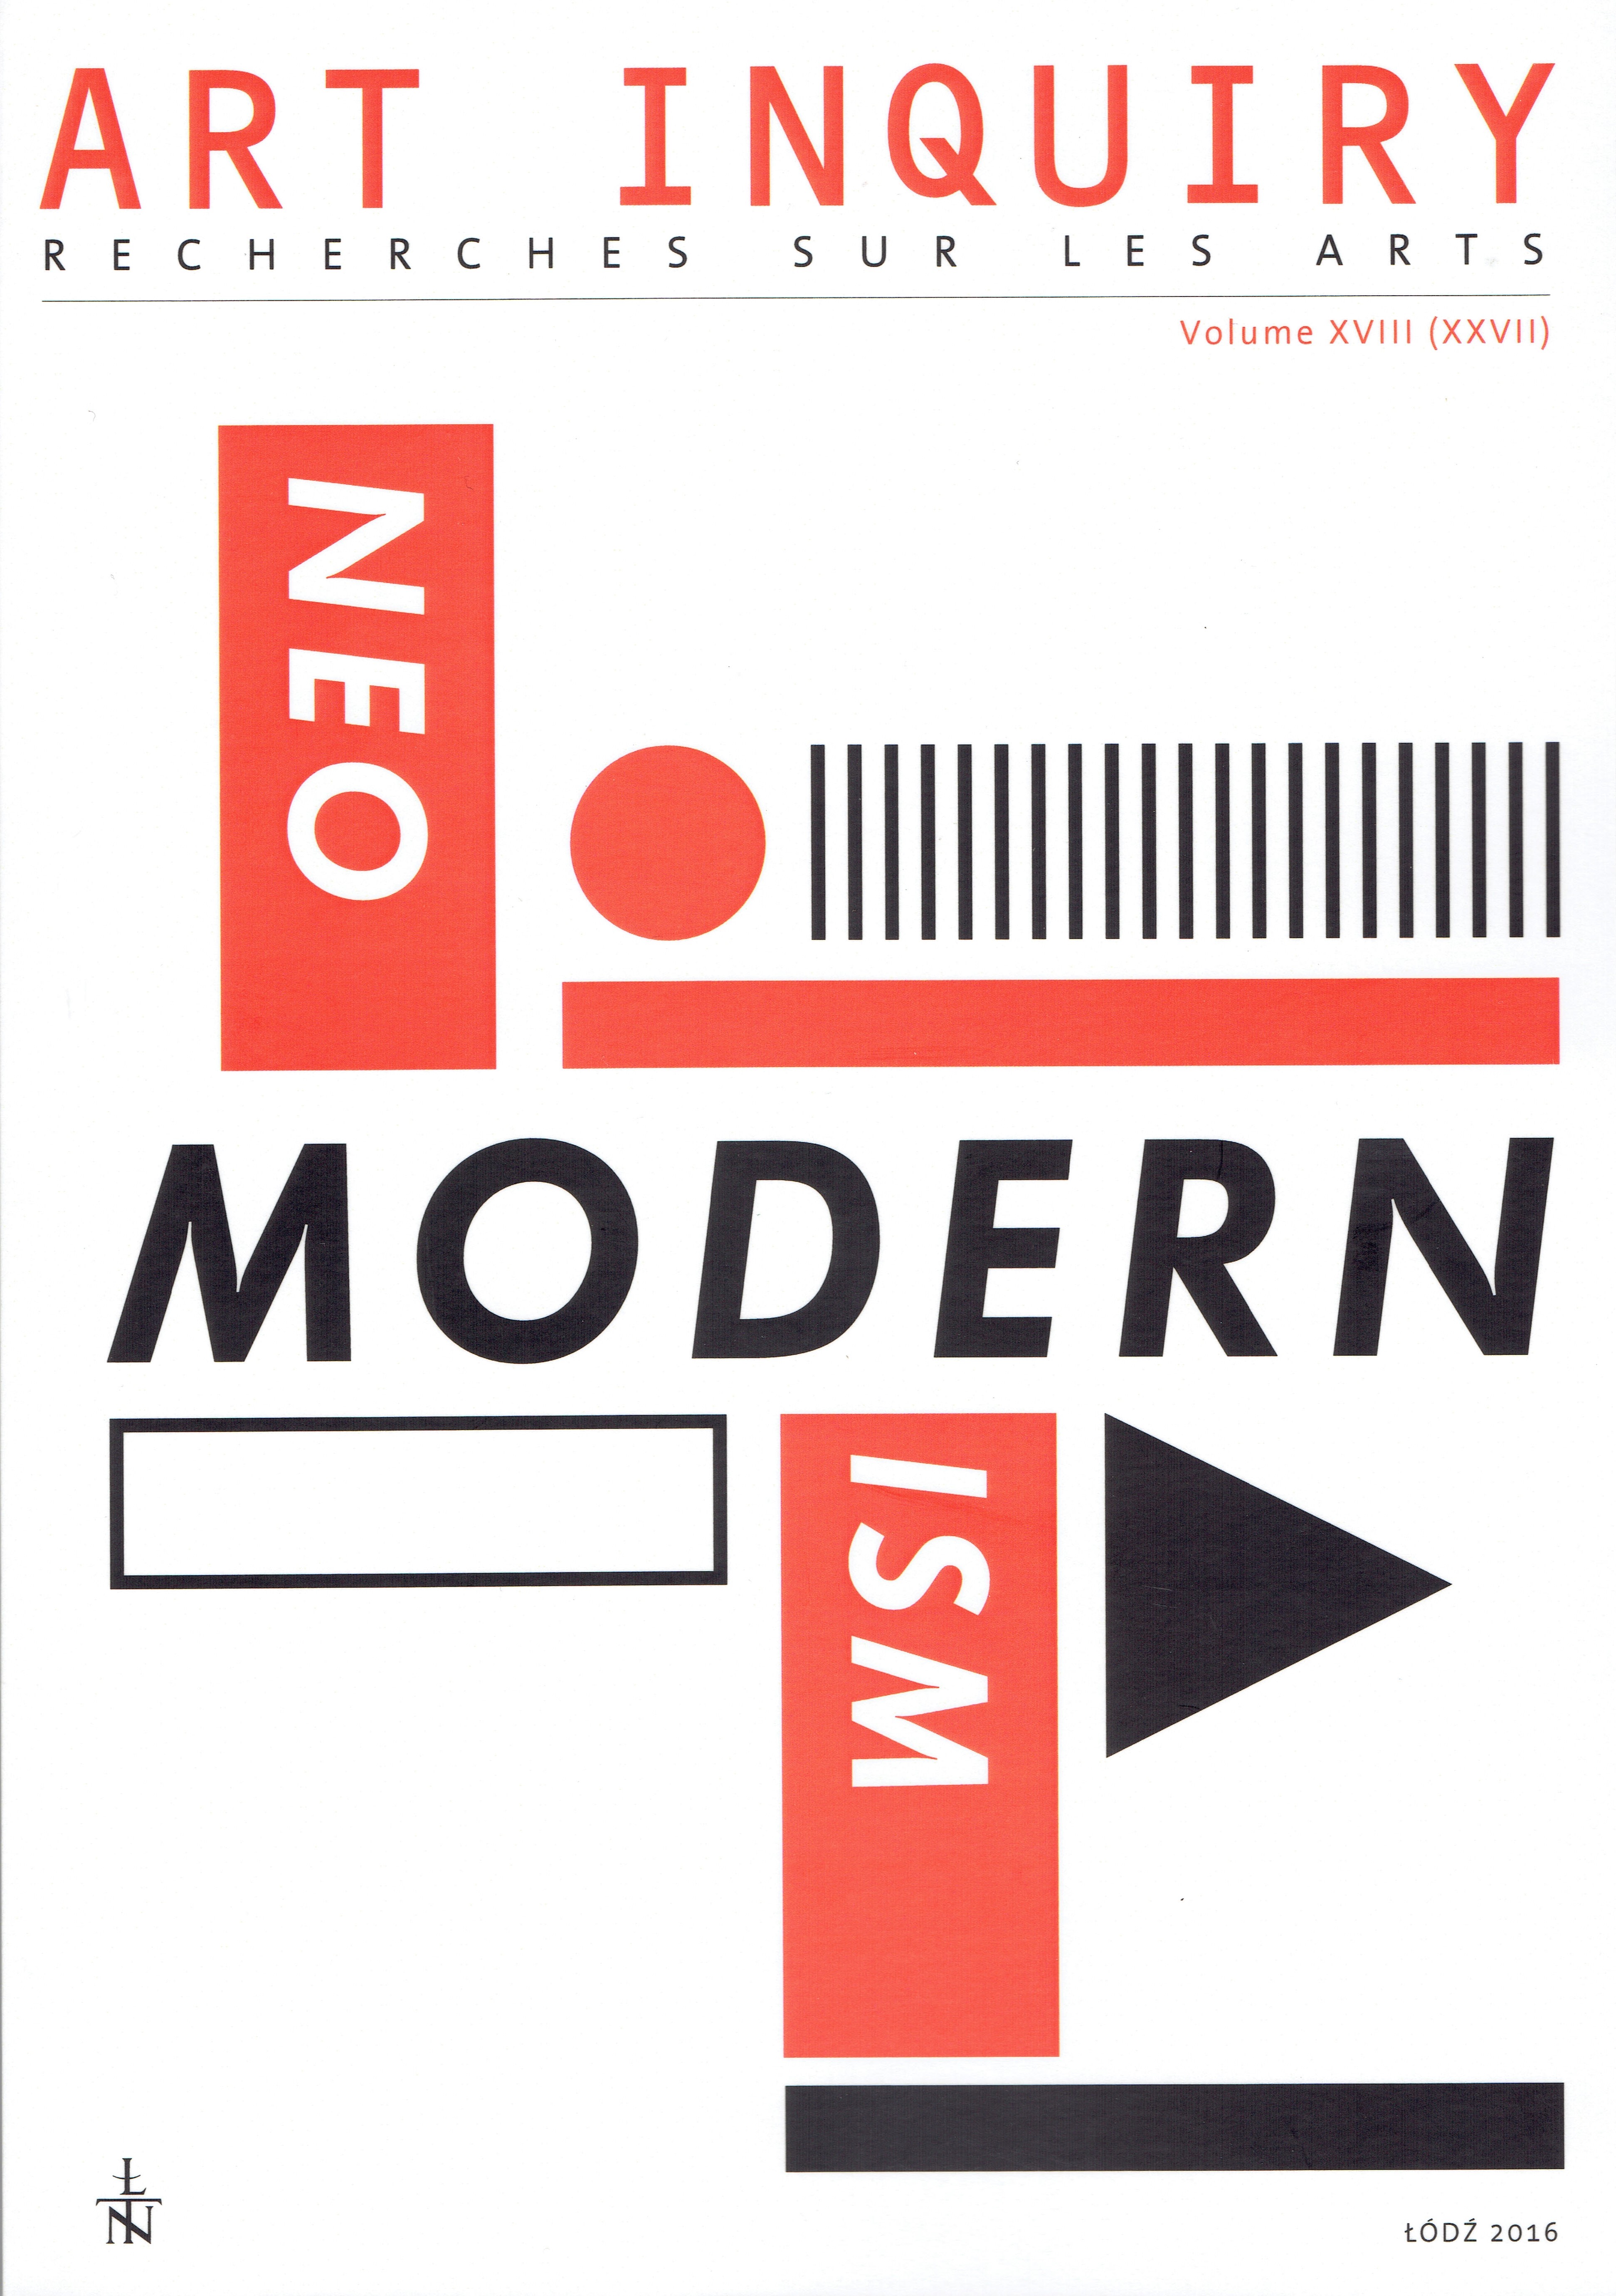 Neo/modernism – philosophical awareness in art